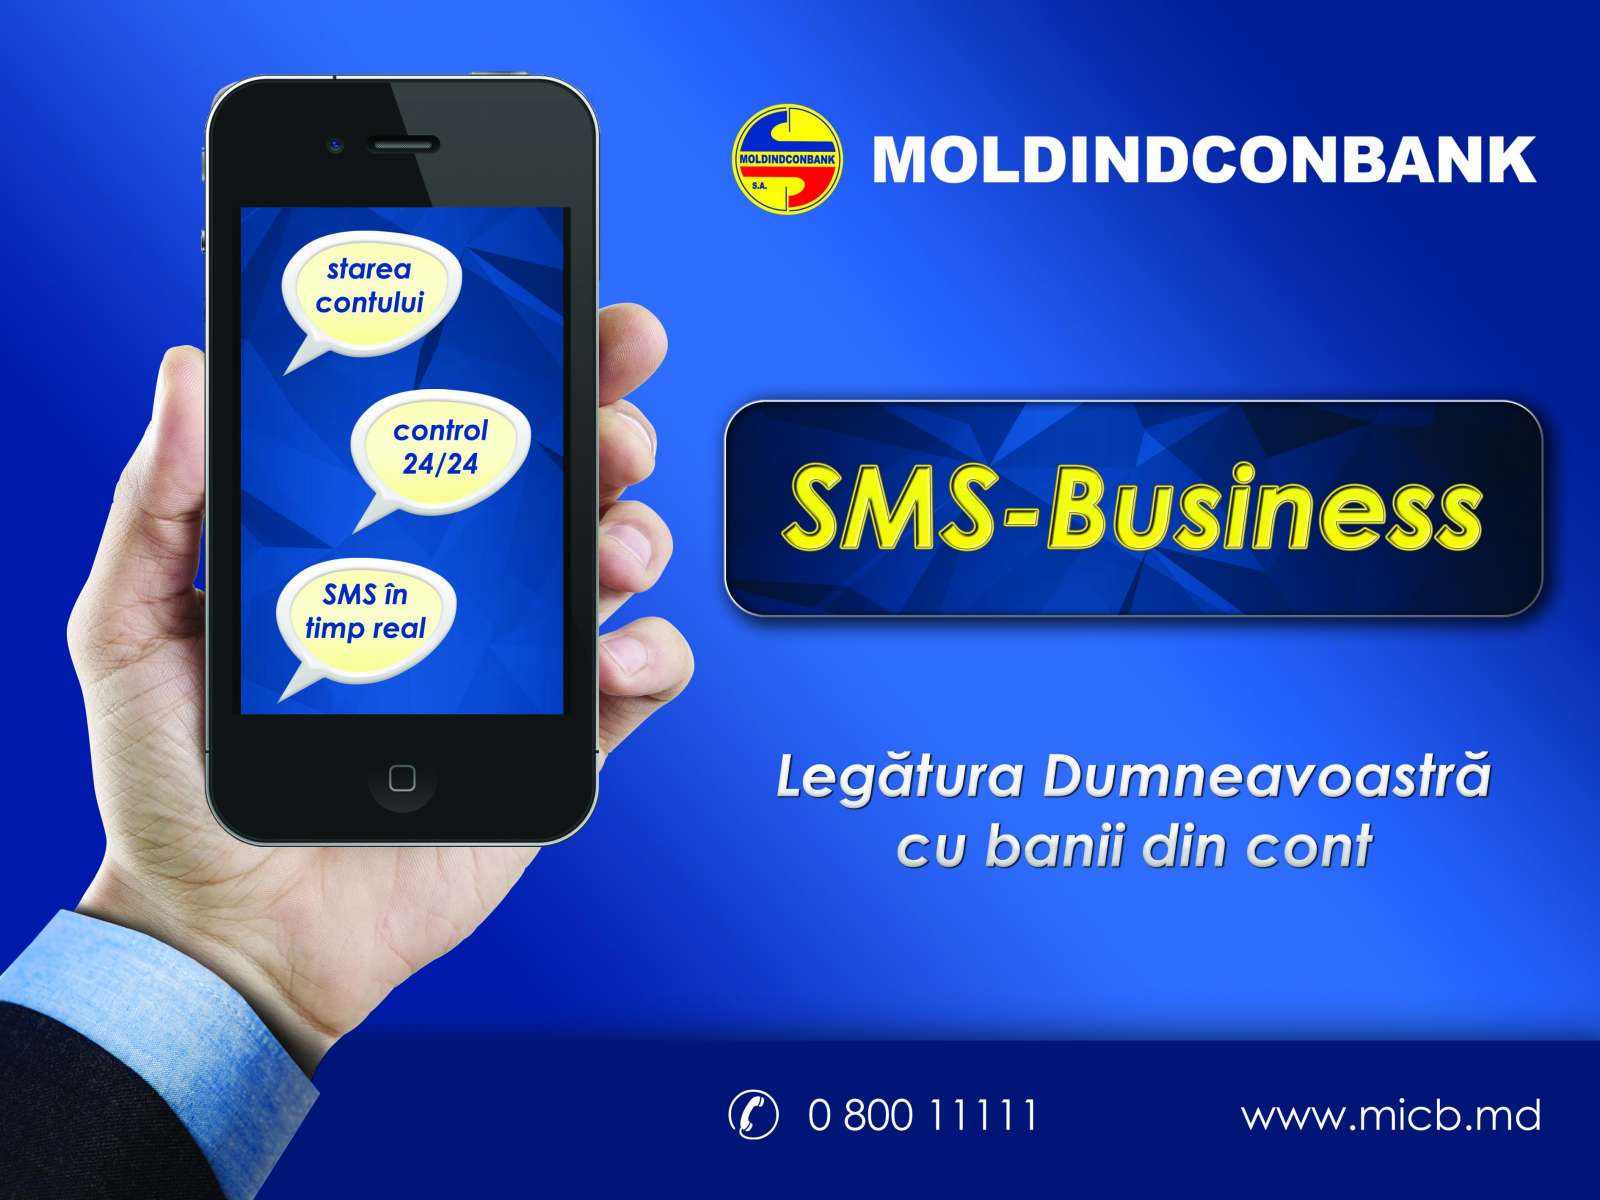 Бизнес смс. Moldindconbank SMS. Moldindconbank счёт. Деловое SMS. T me sms leads